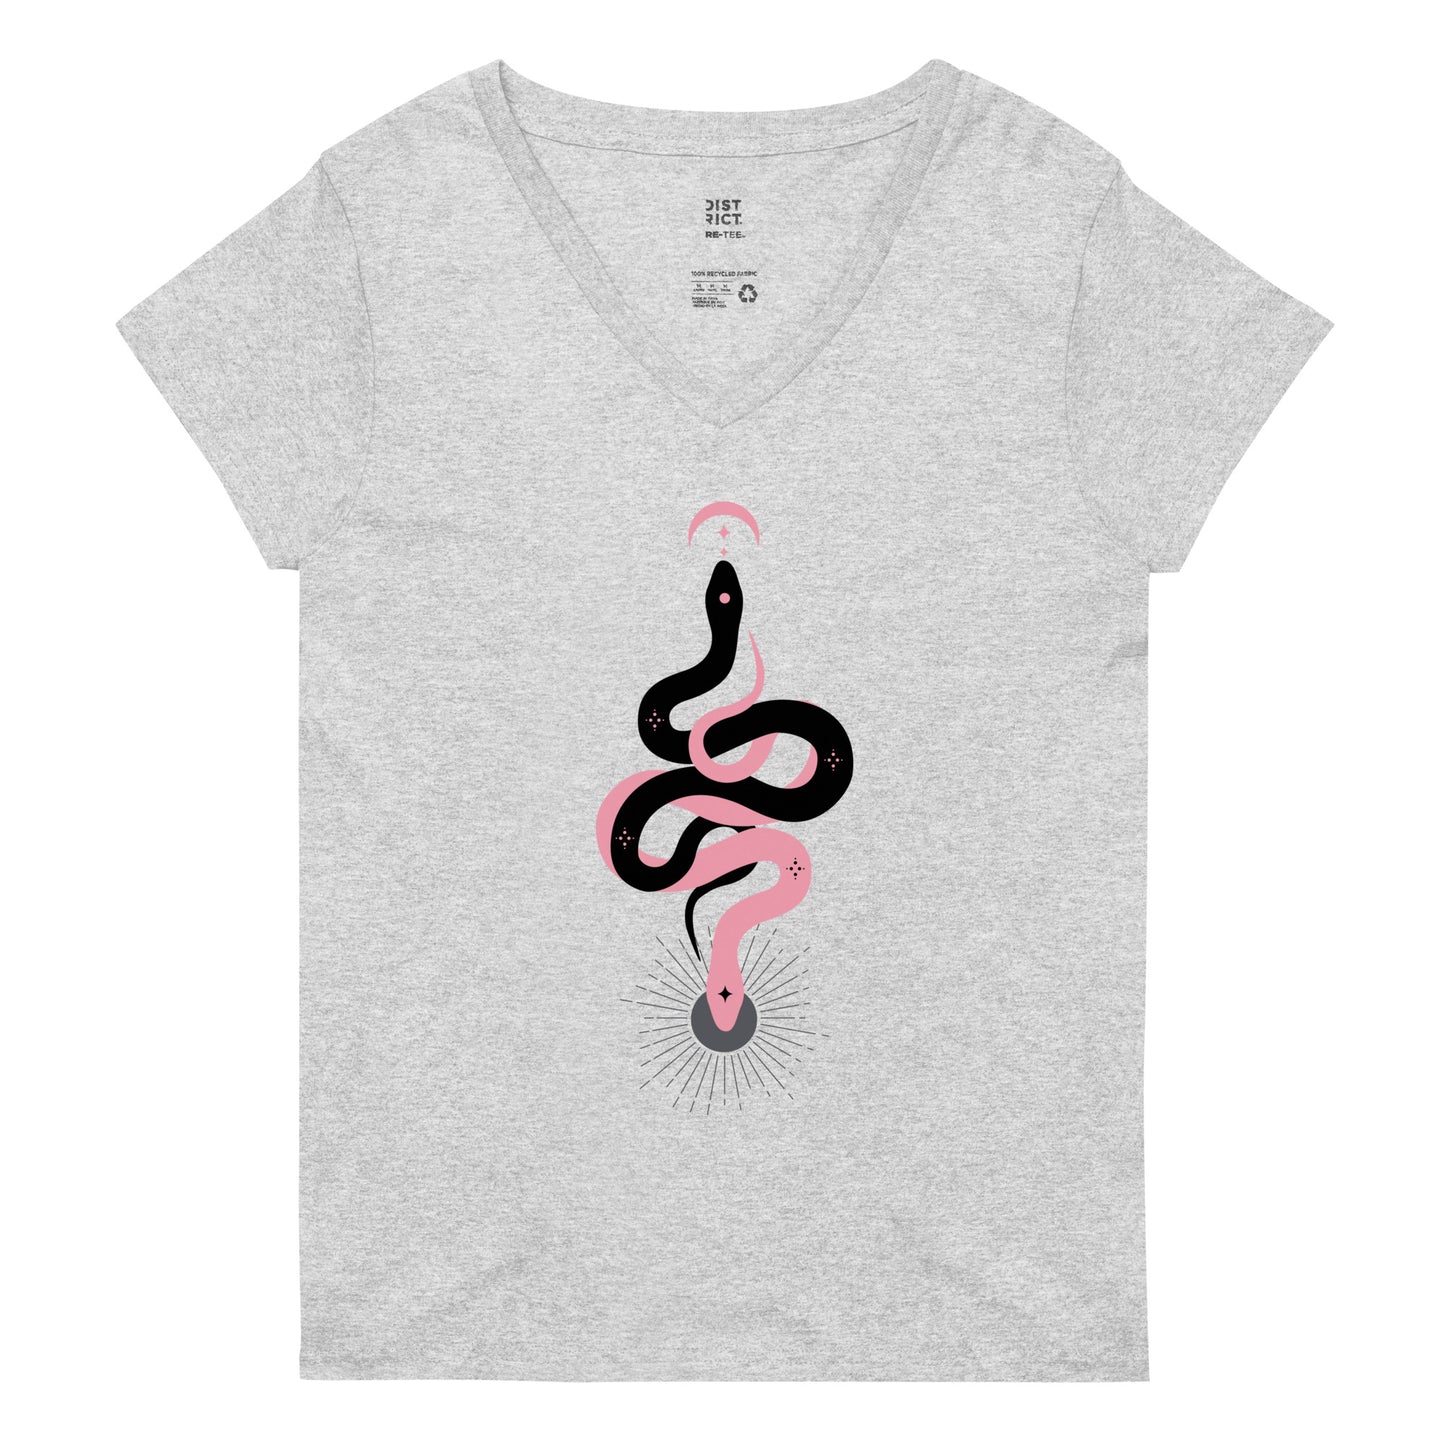 Morbid Alaina Ash Snakes Women's Recycled V-Neck T-Shirt